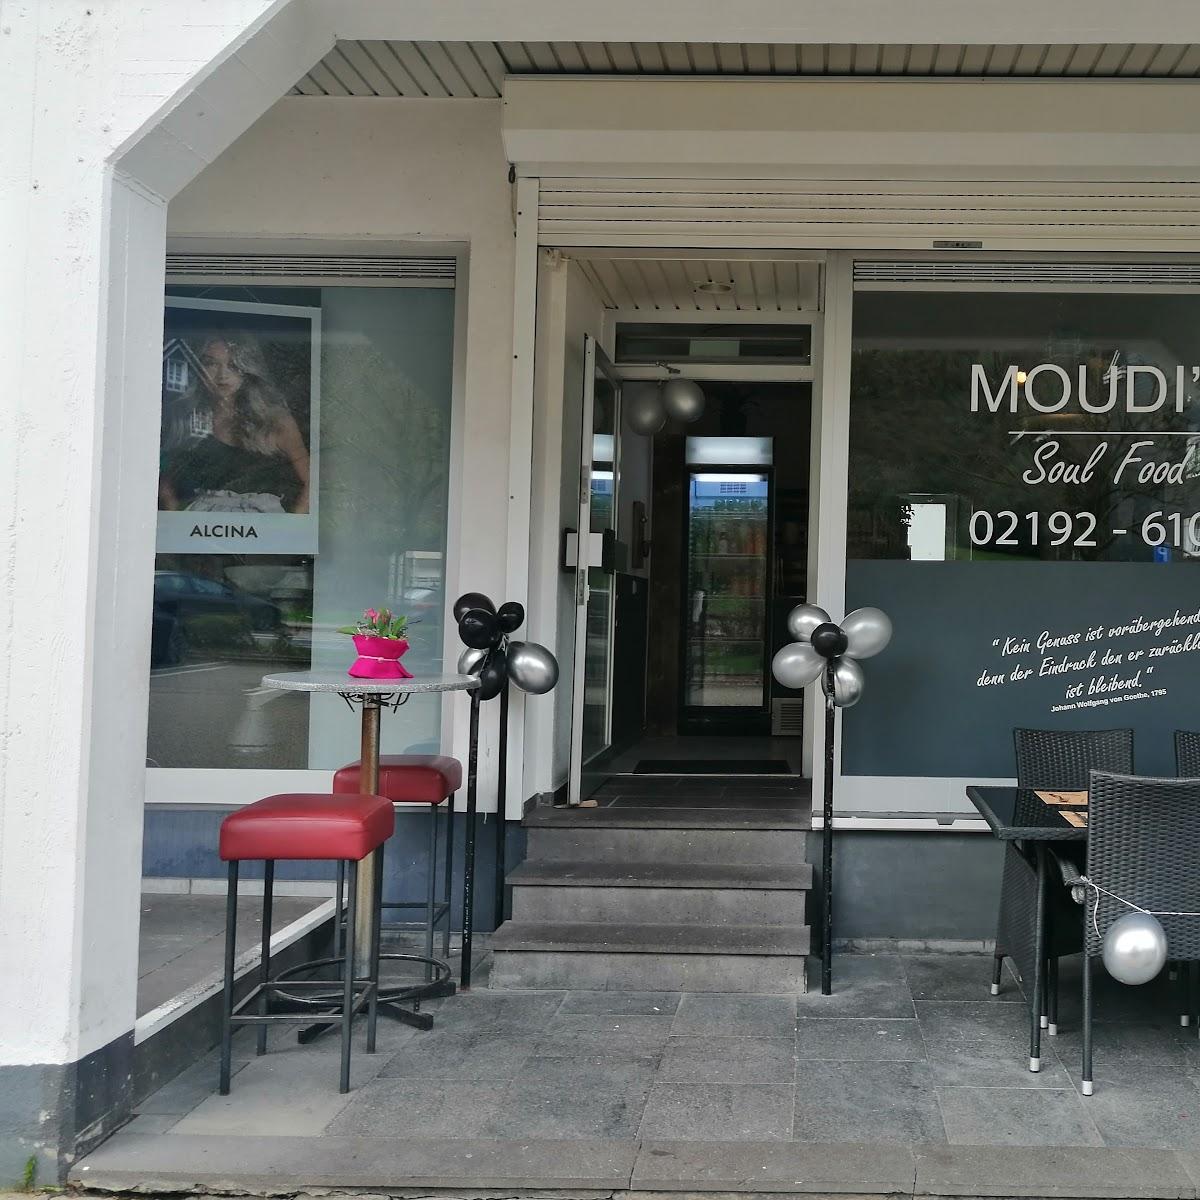 Restaurant "Moudi